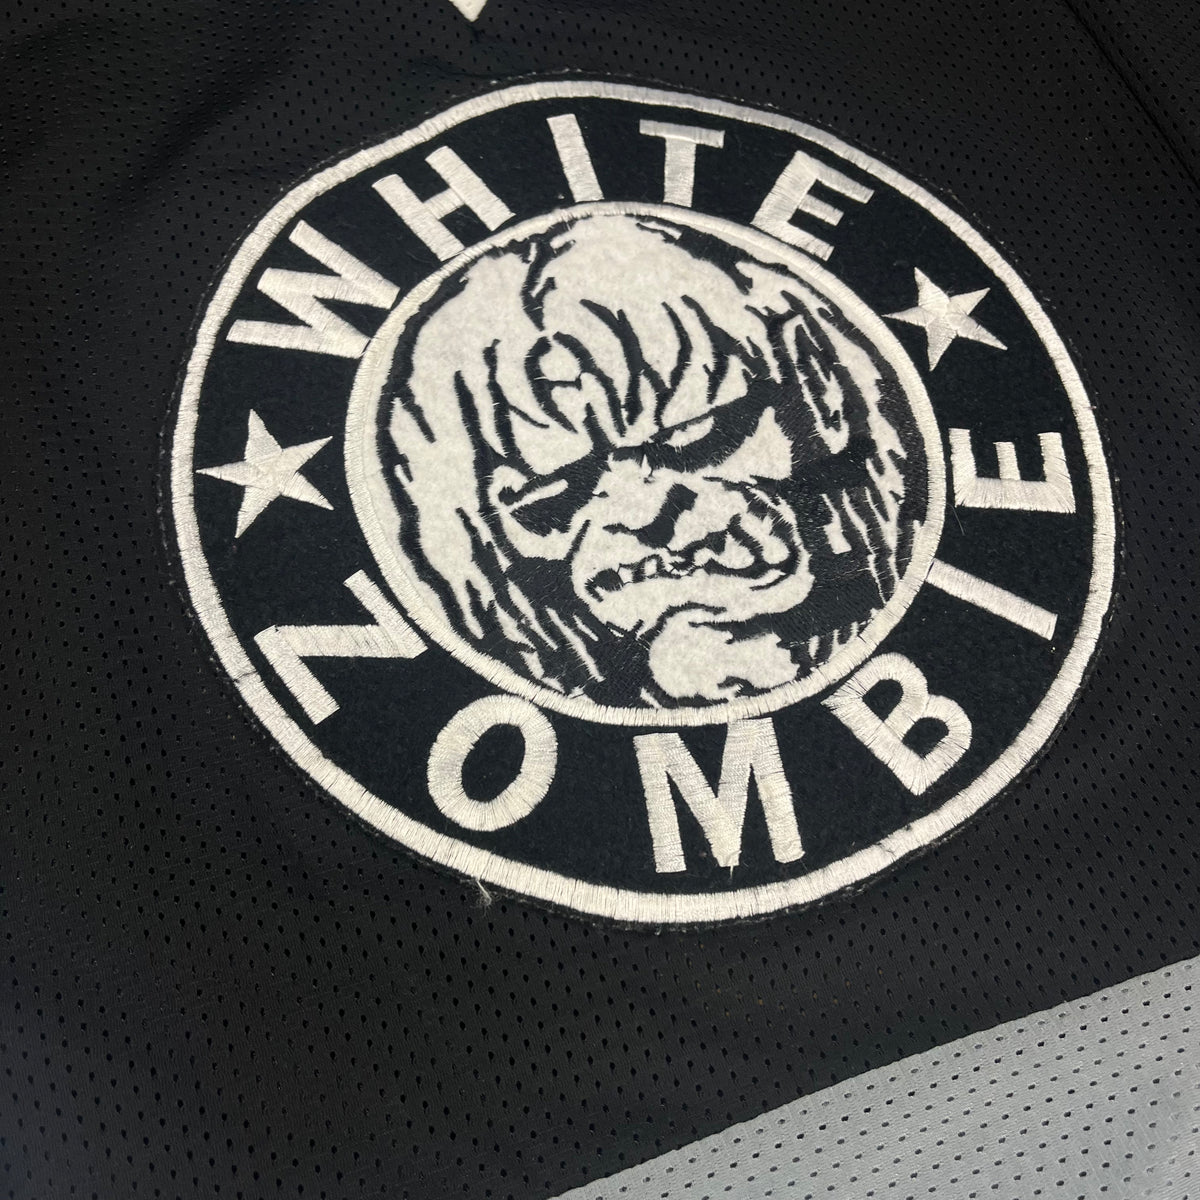 Vintage White Zombie Hockey Jersey